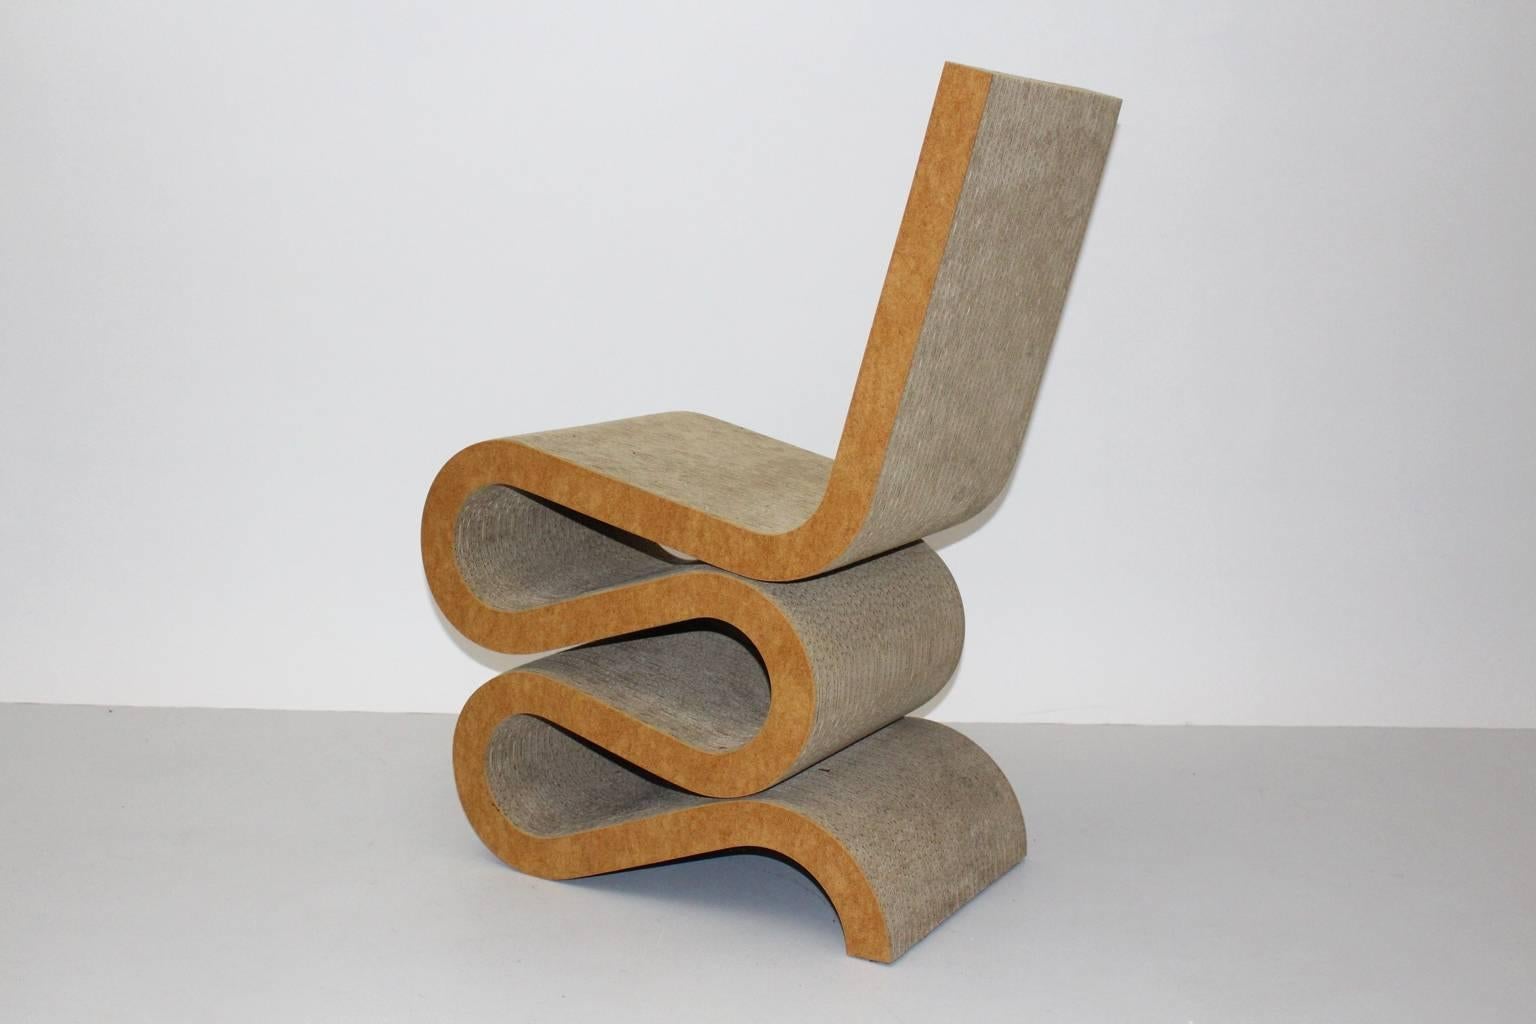 frank gehry cardboard chair